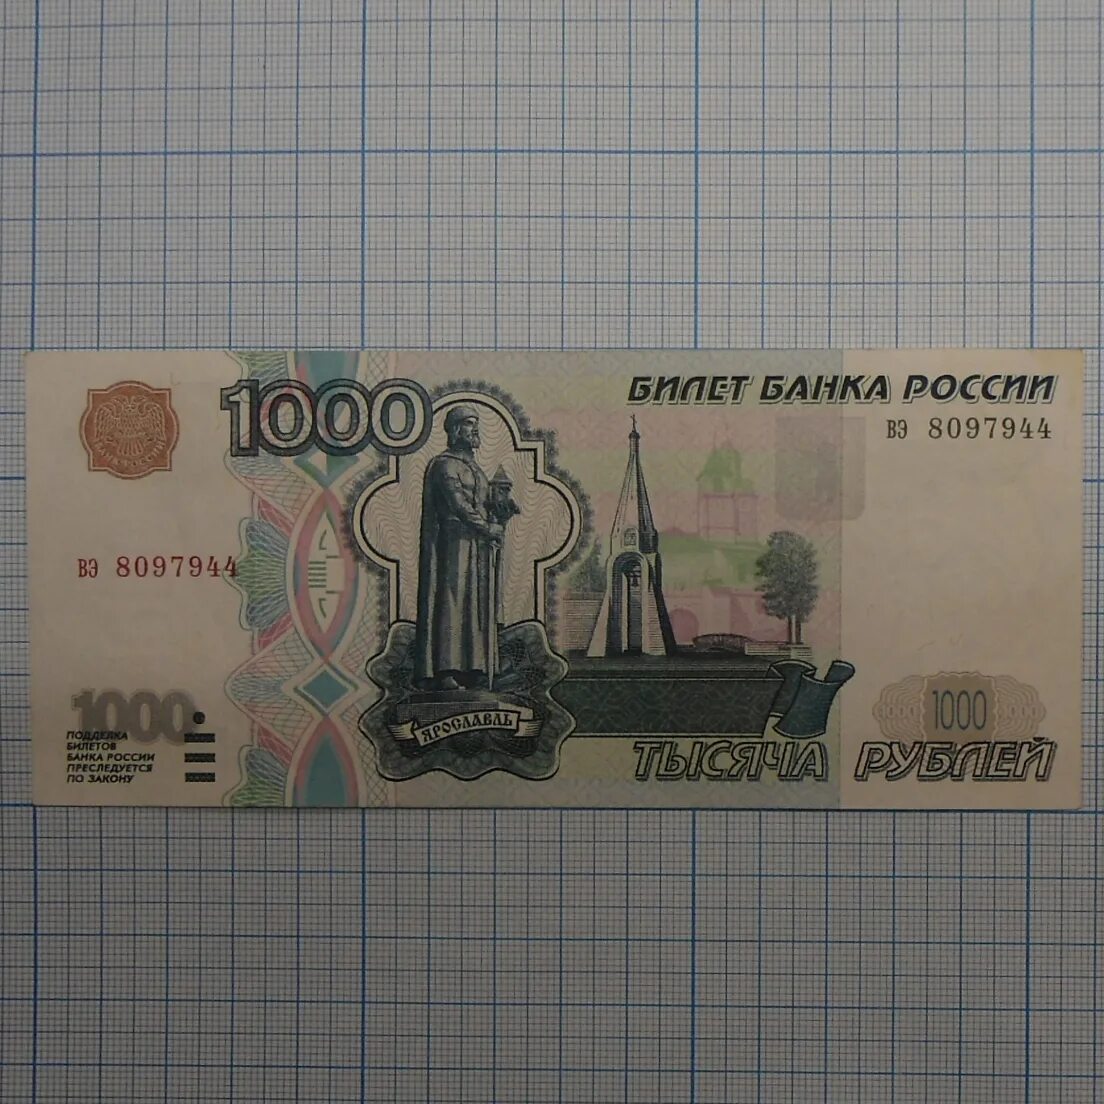 1000 рублей 2004. 1000 Рублей 1997 (модификация 2004 года) UNC. 1000 Рублей 1997 модификация 2004. Купюра 1000 рублей 1997 модификация. 1000 Рублей 2004 года модификации.